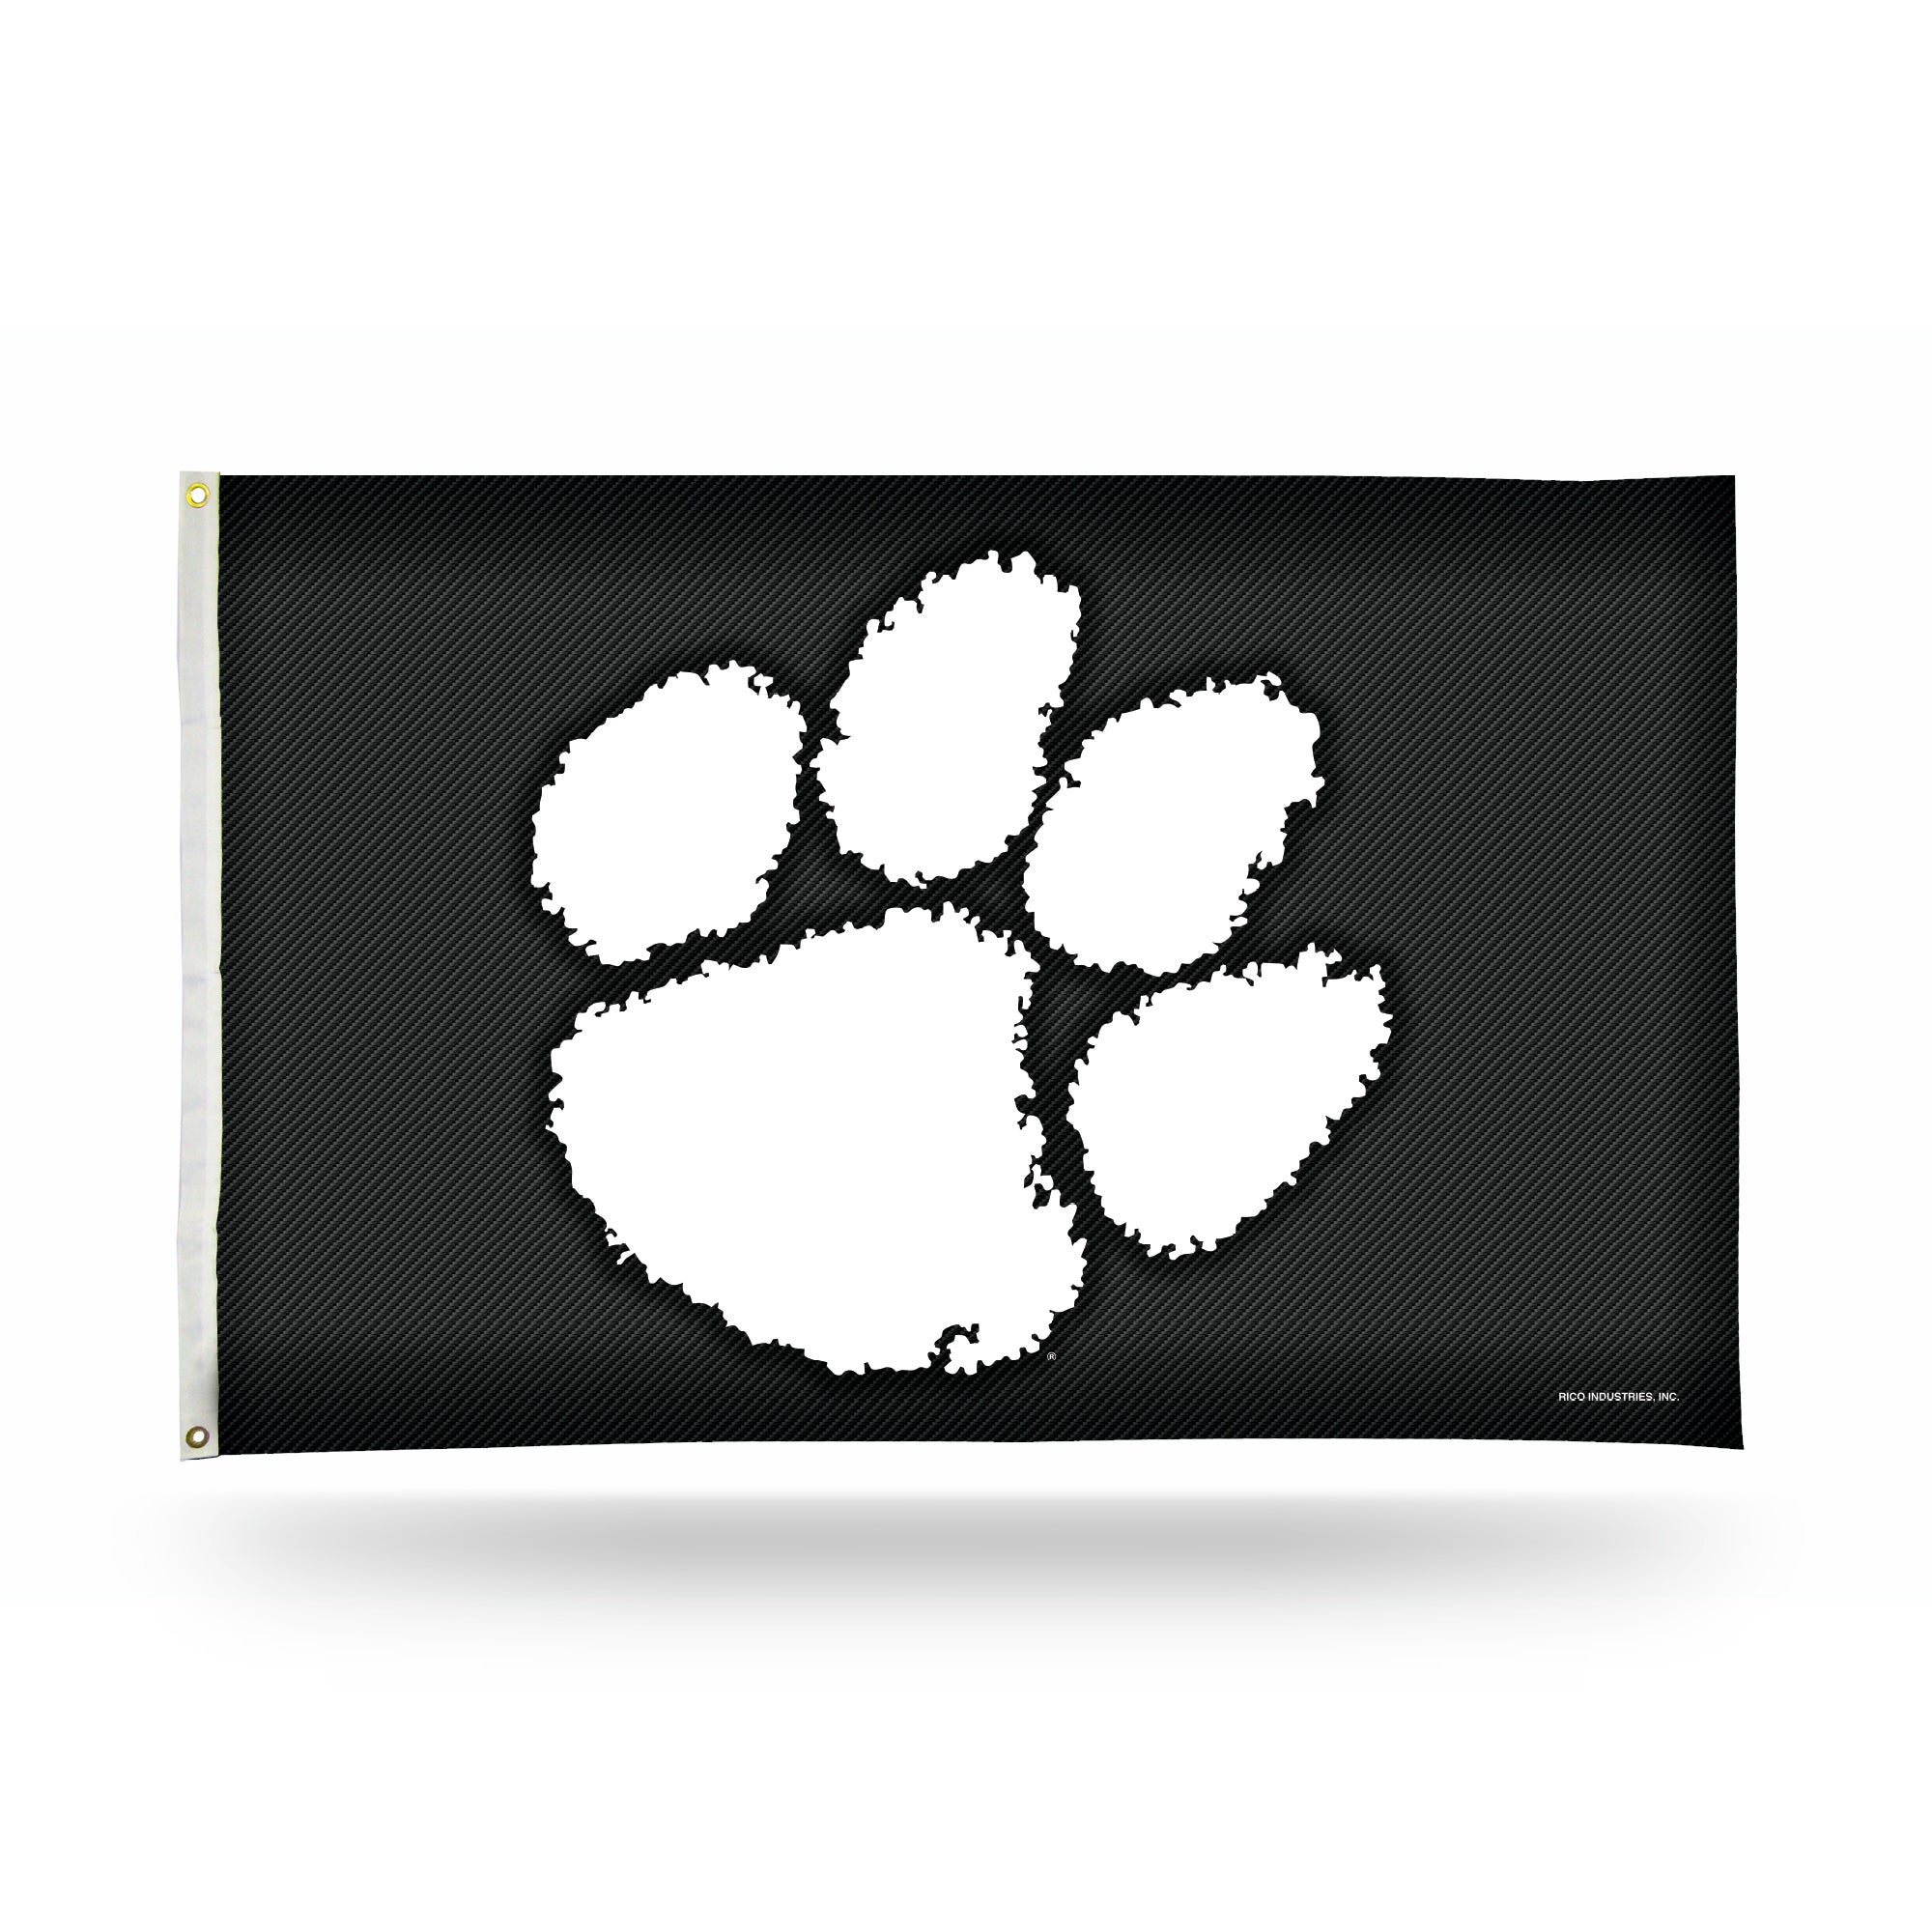 Clemson Tigers 3x5 Premium Banner Flag - Carbon Fiber Design